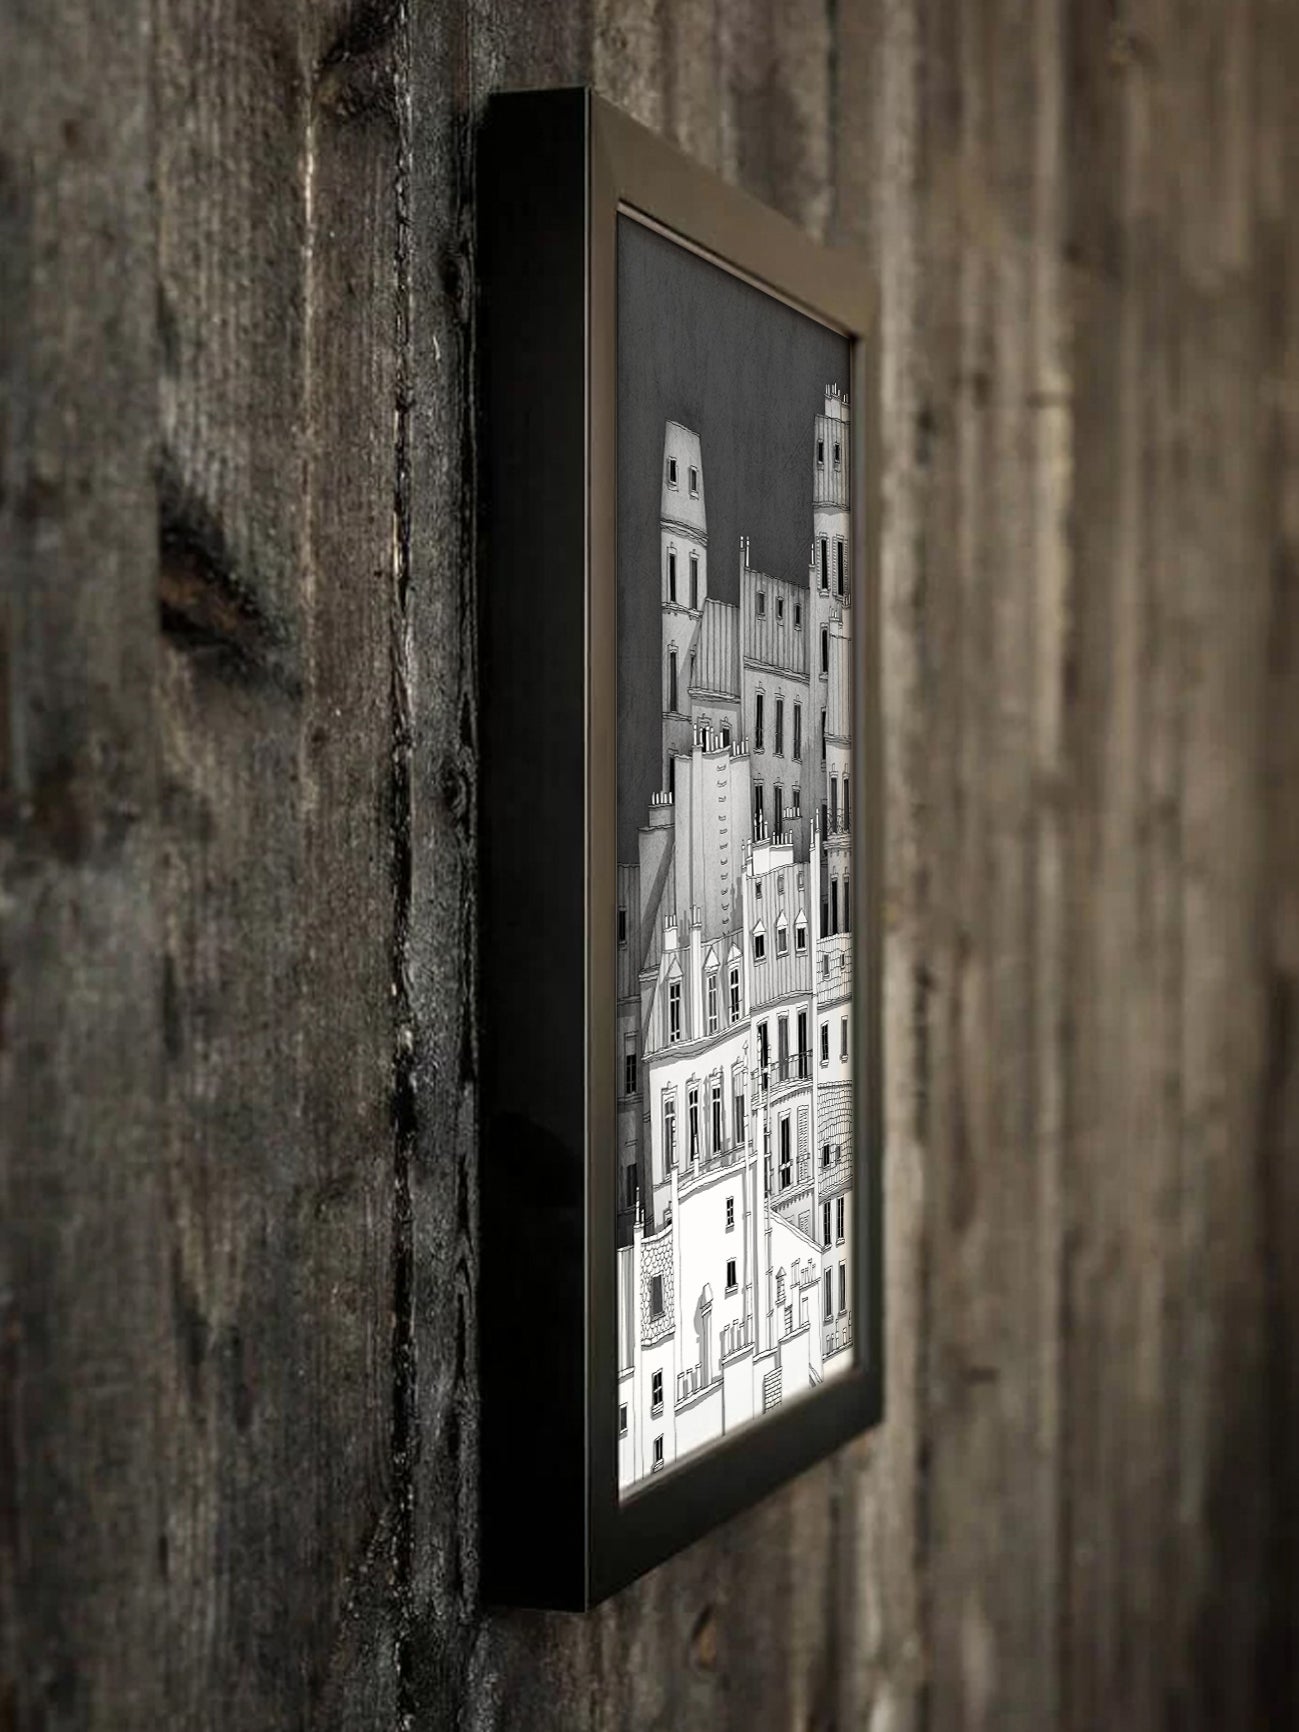 Paris Montmartre (black and white) - Framed Art Print